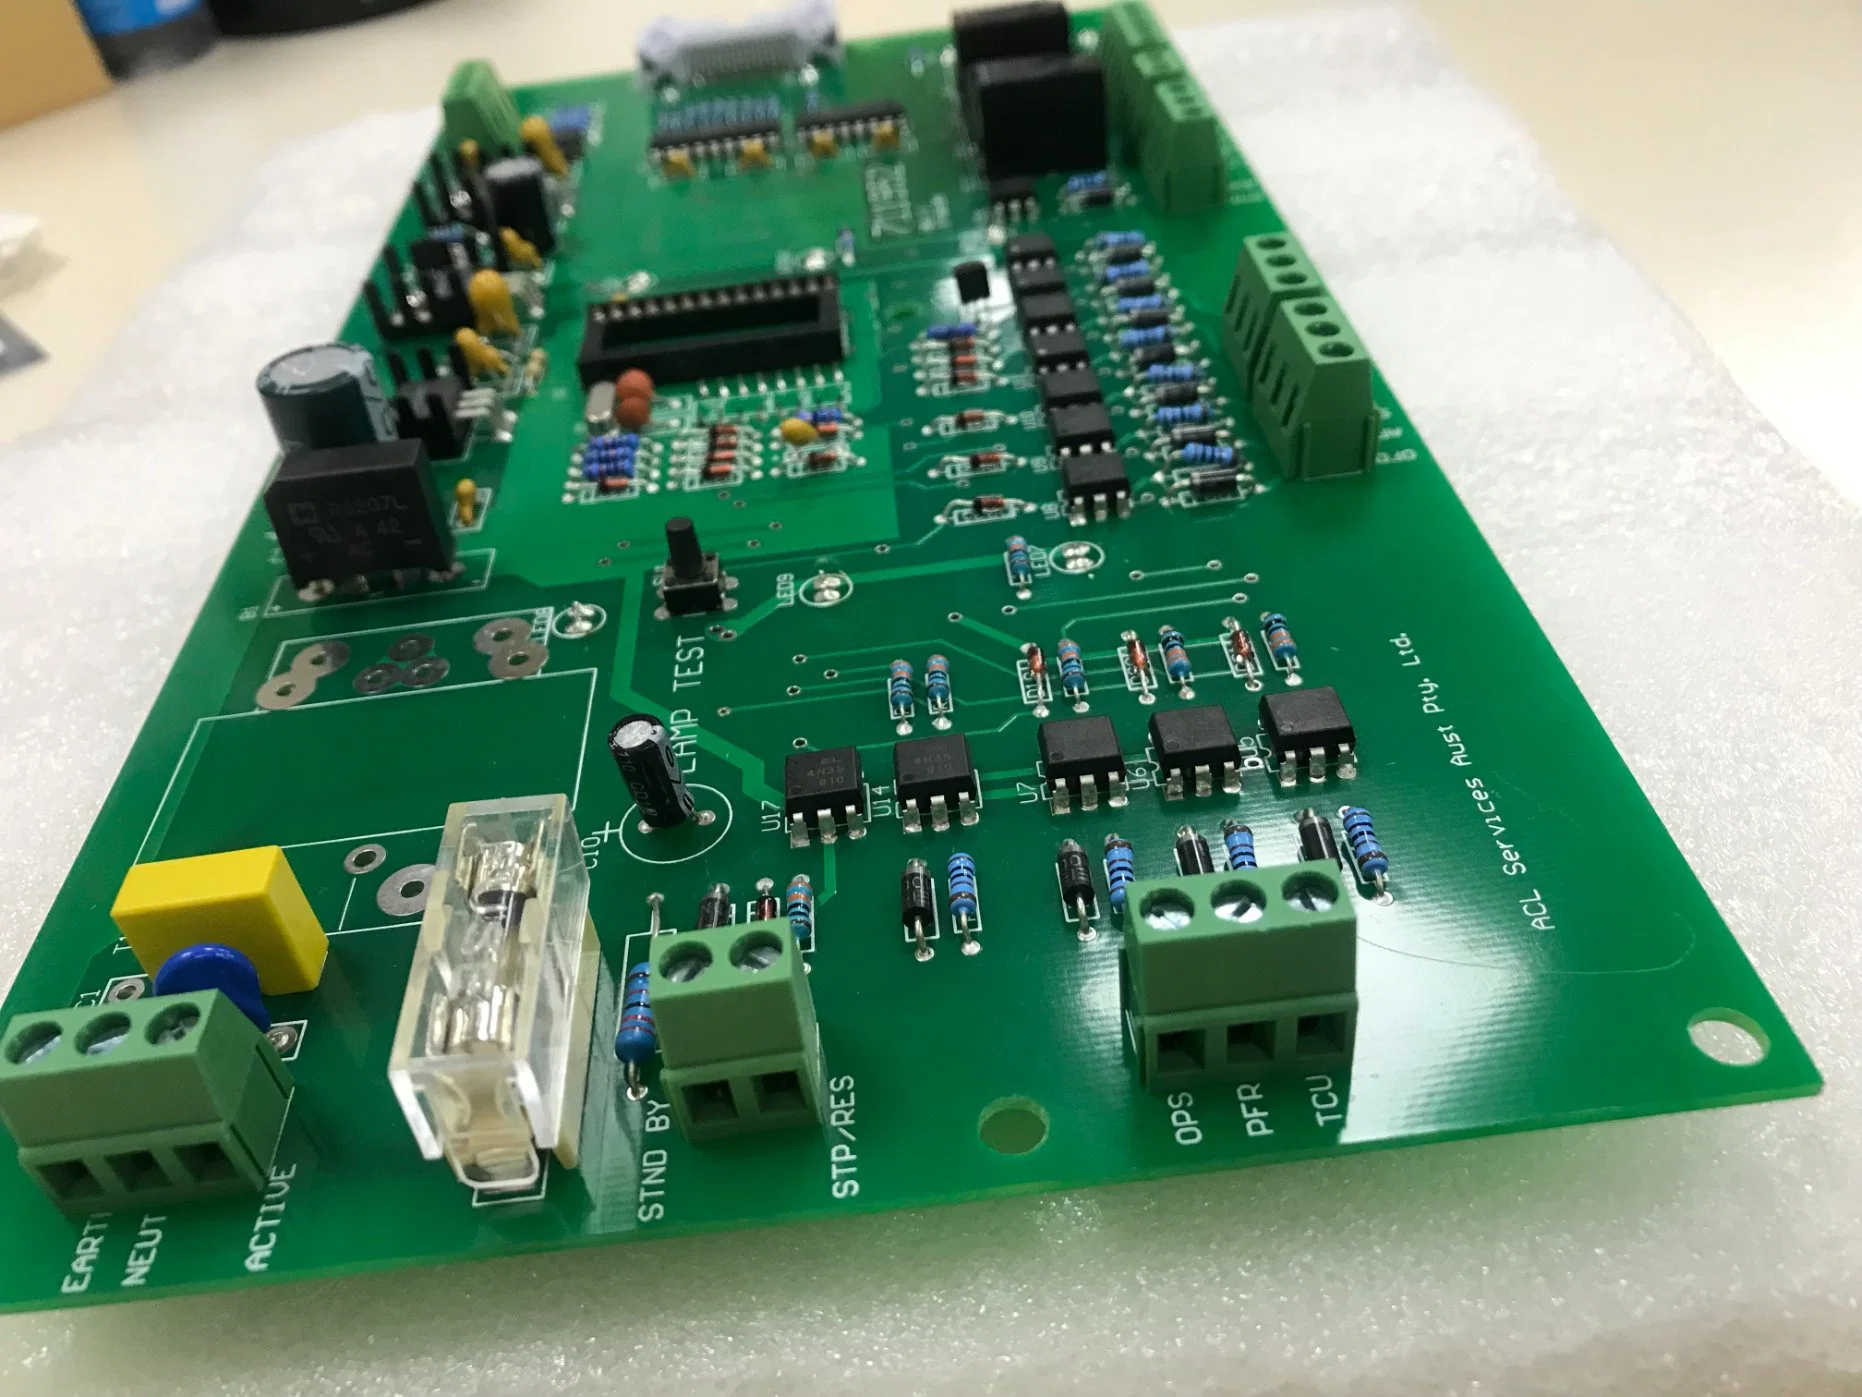 Un service OEM complet de fabrication de cartes de circuits imprimés SMD.